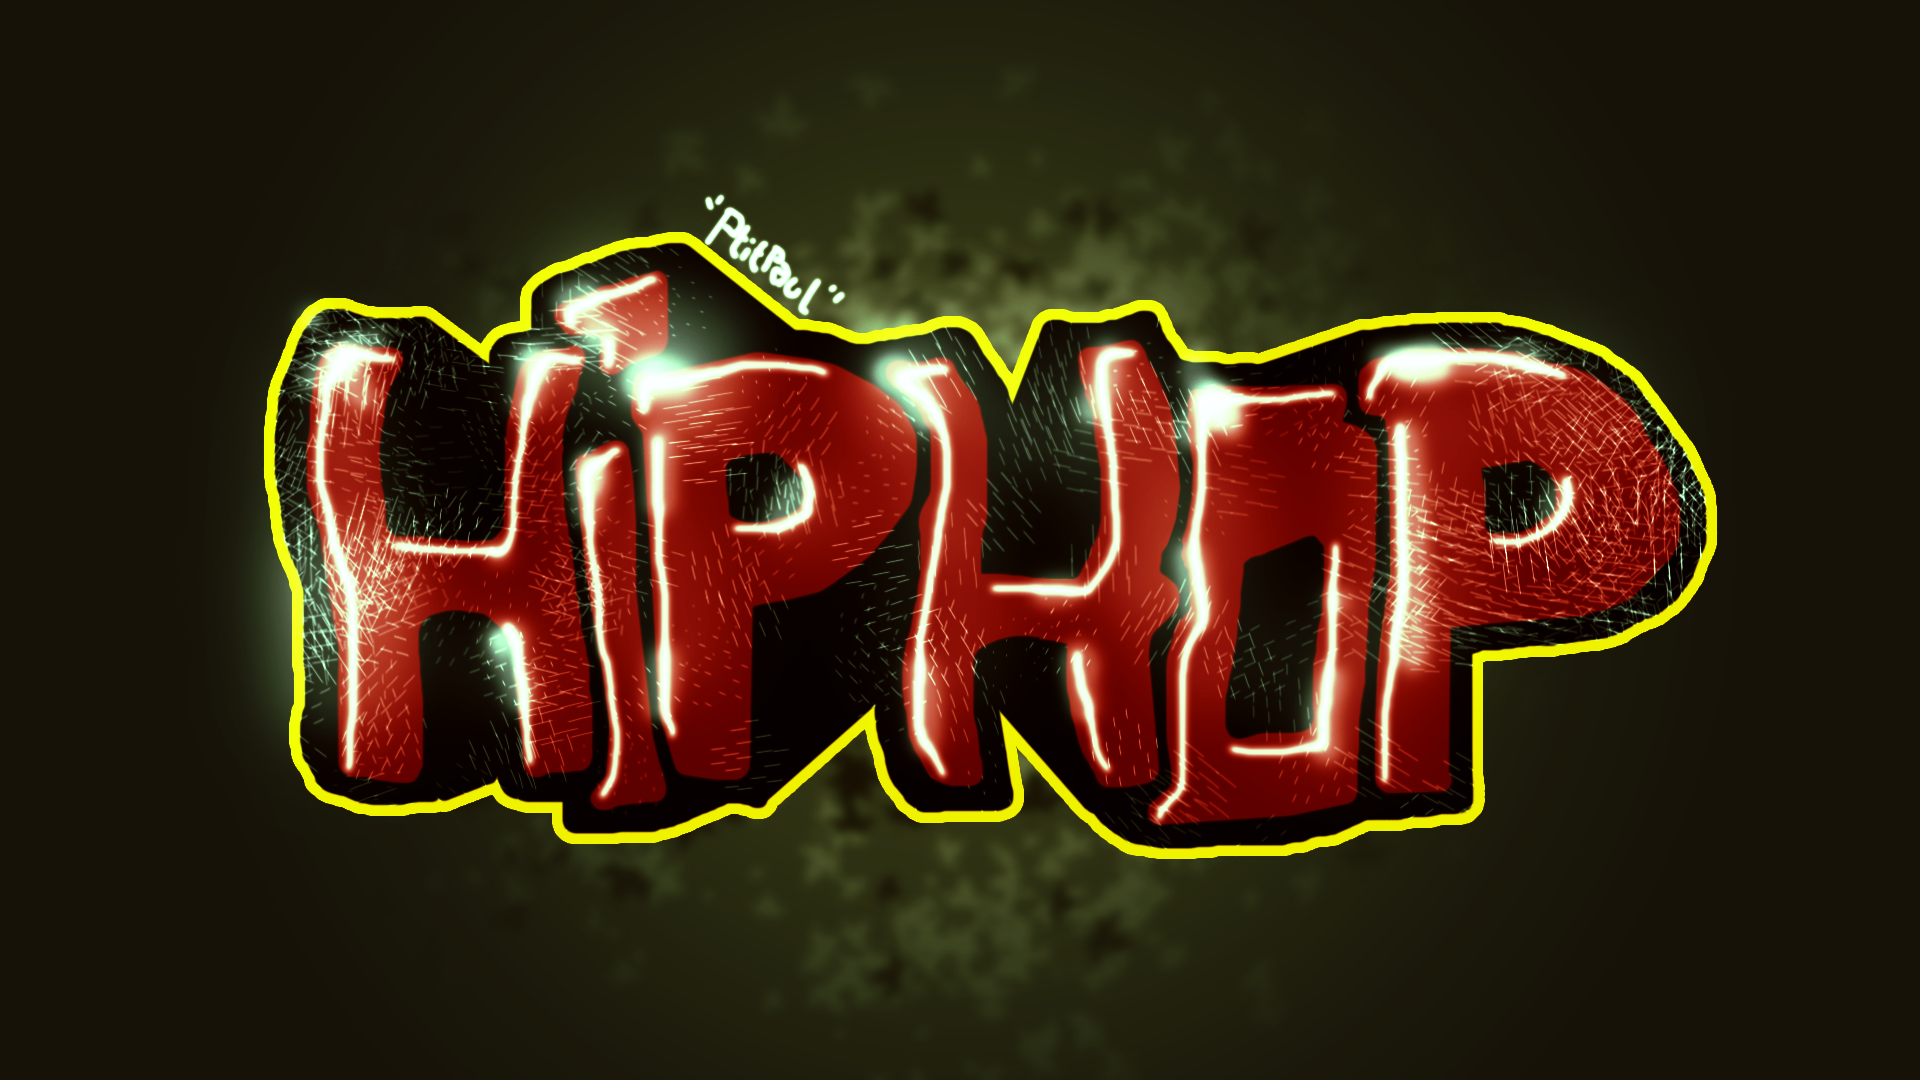 HipHop Graffiti by PtitPaulDesign on